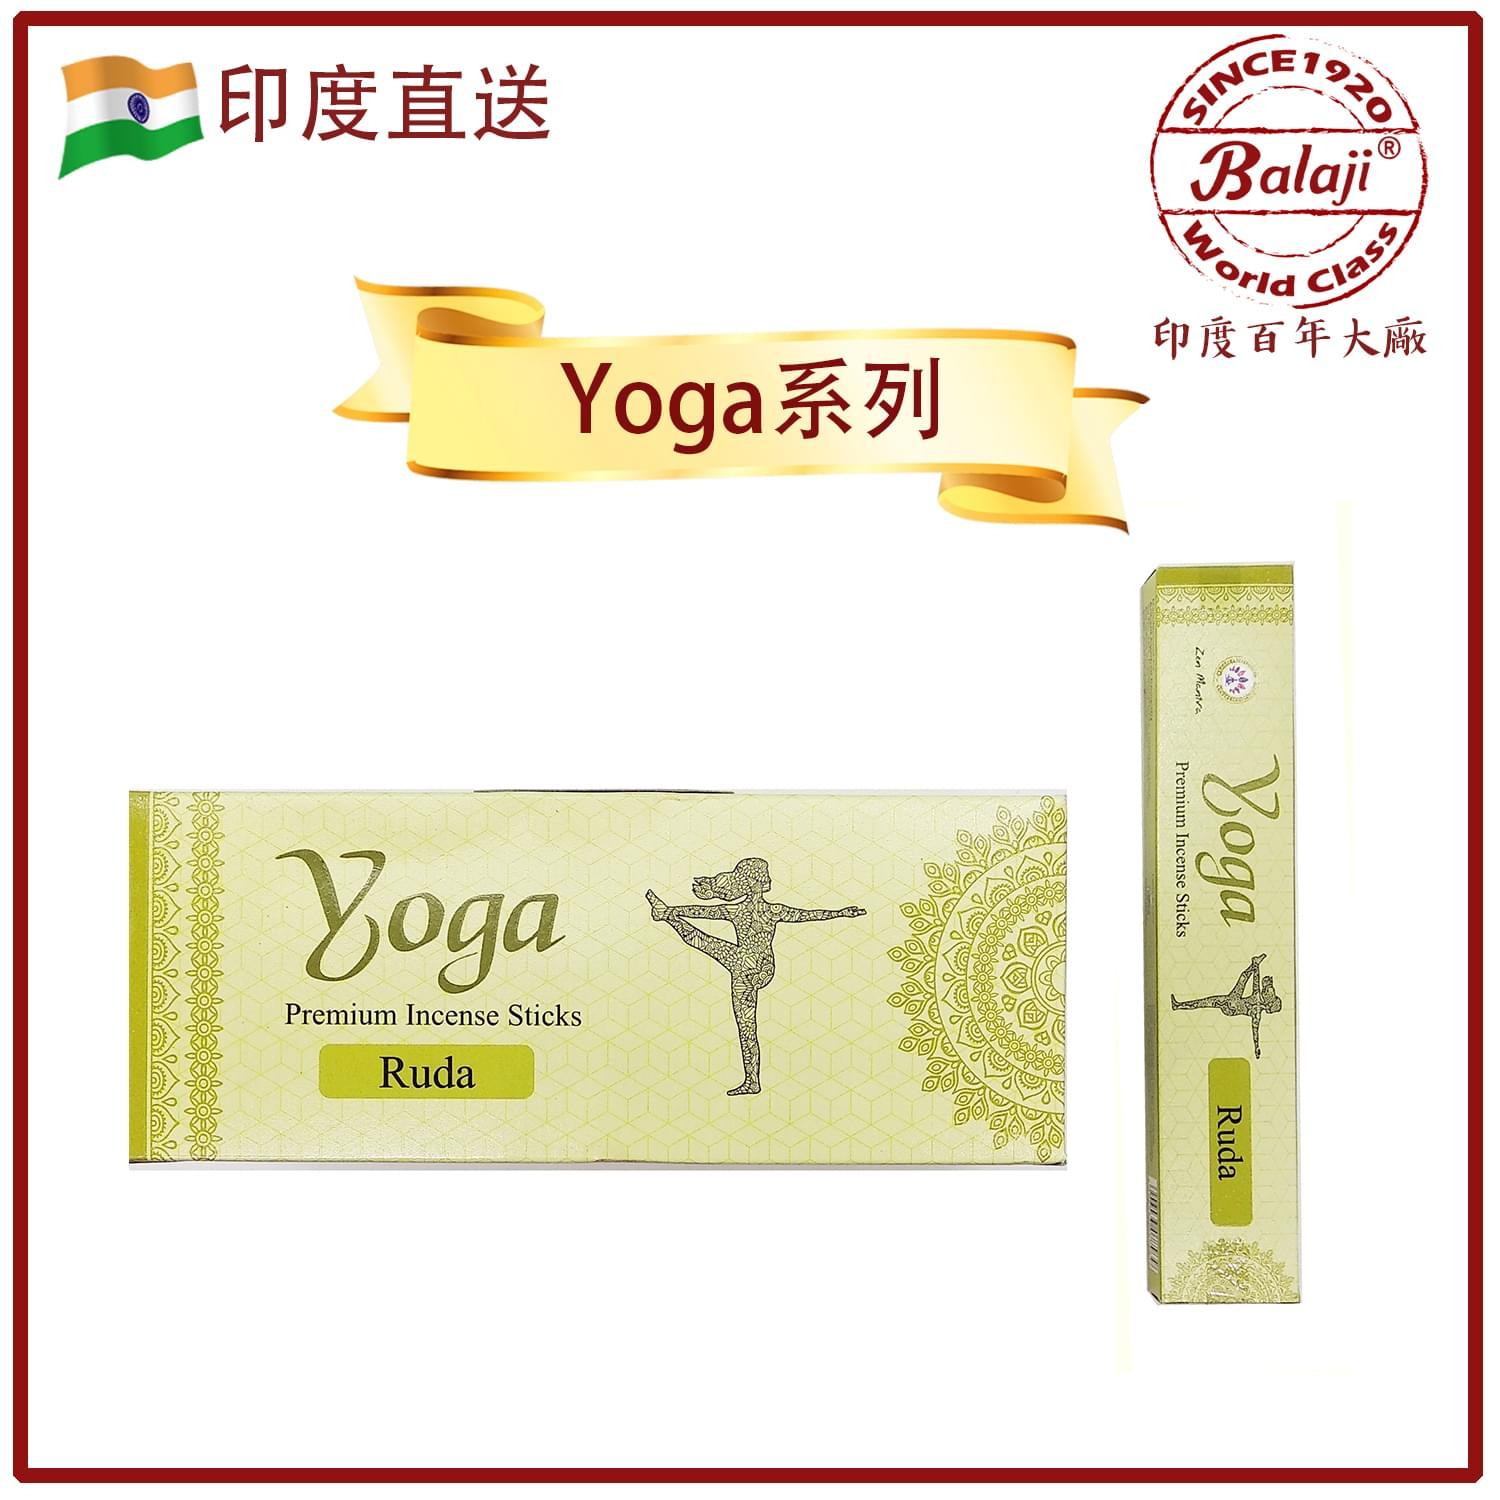 RUDA魯達瑜珈系列優質線香15支四方長條盒裝，高級線香印度進口採用高濃度植物萃取精油煉製而成淨化減壓 (ZIS-YOGA-RUDA)